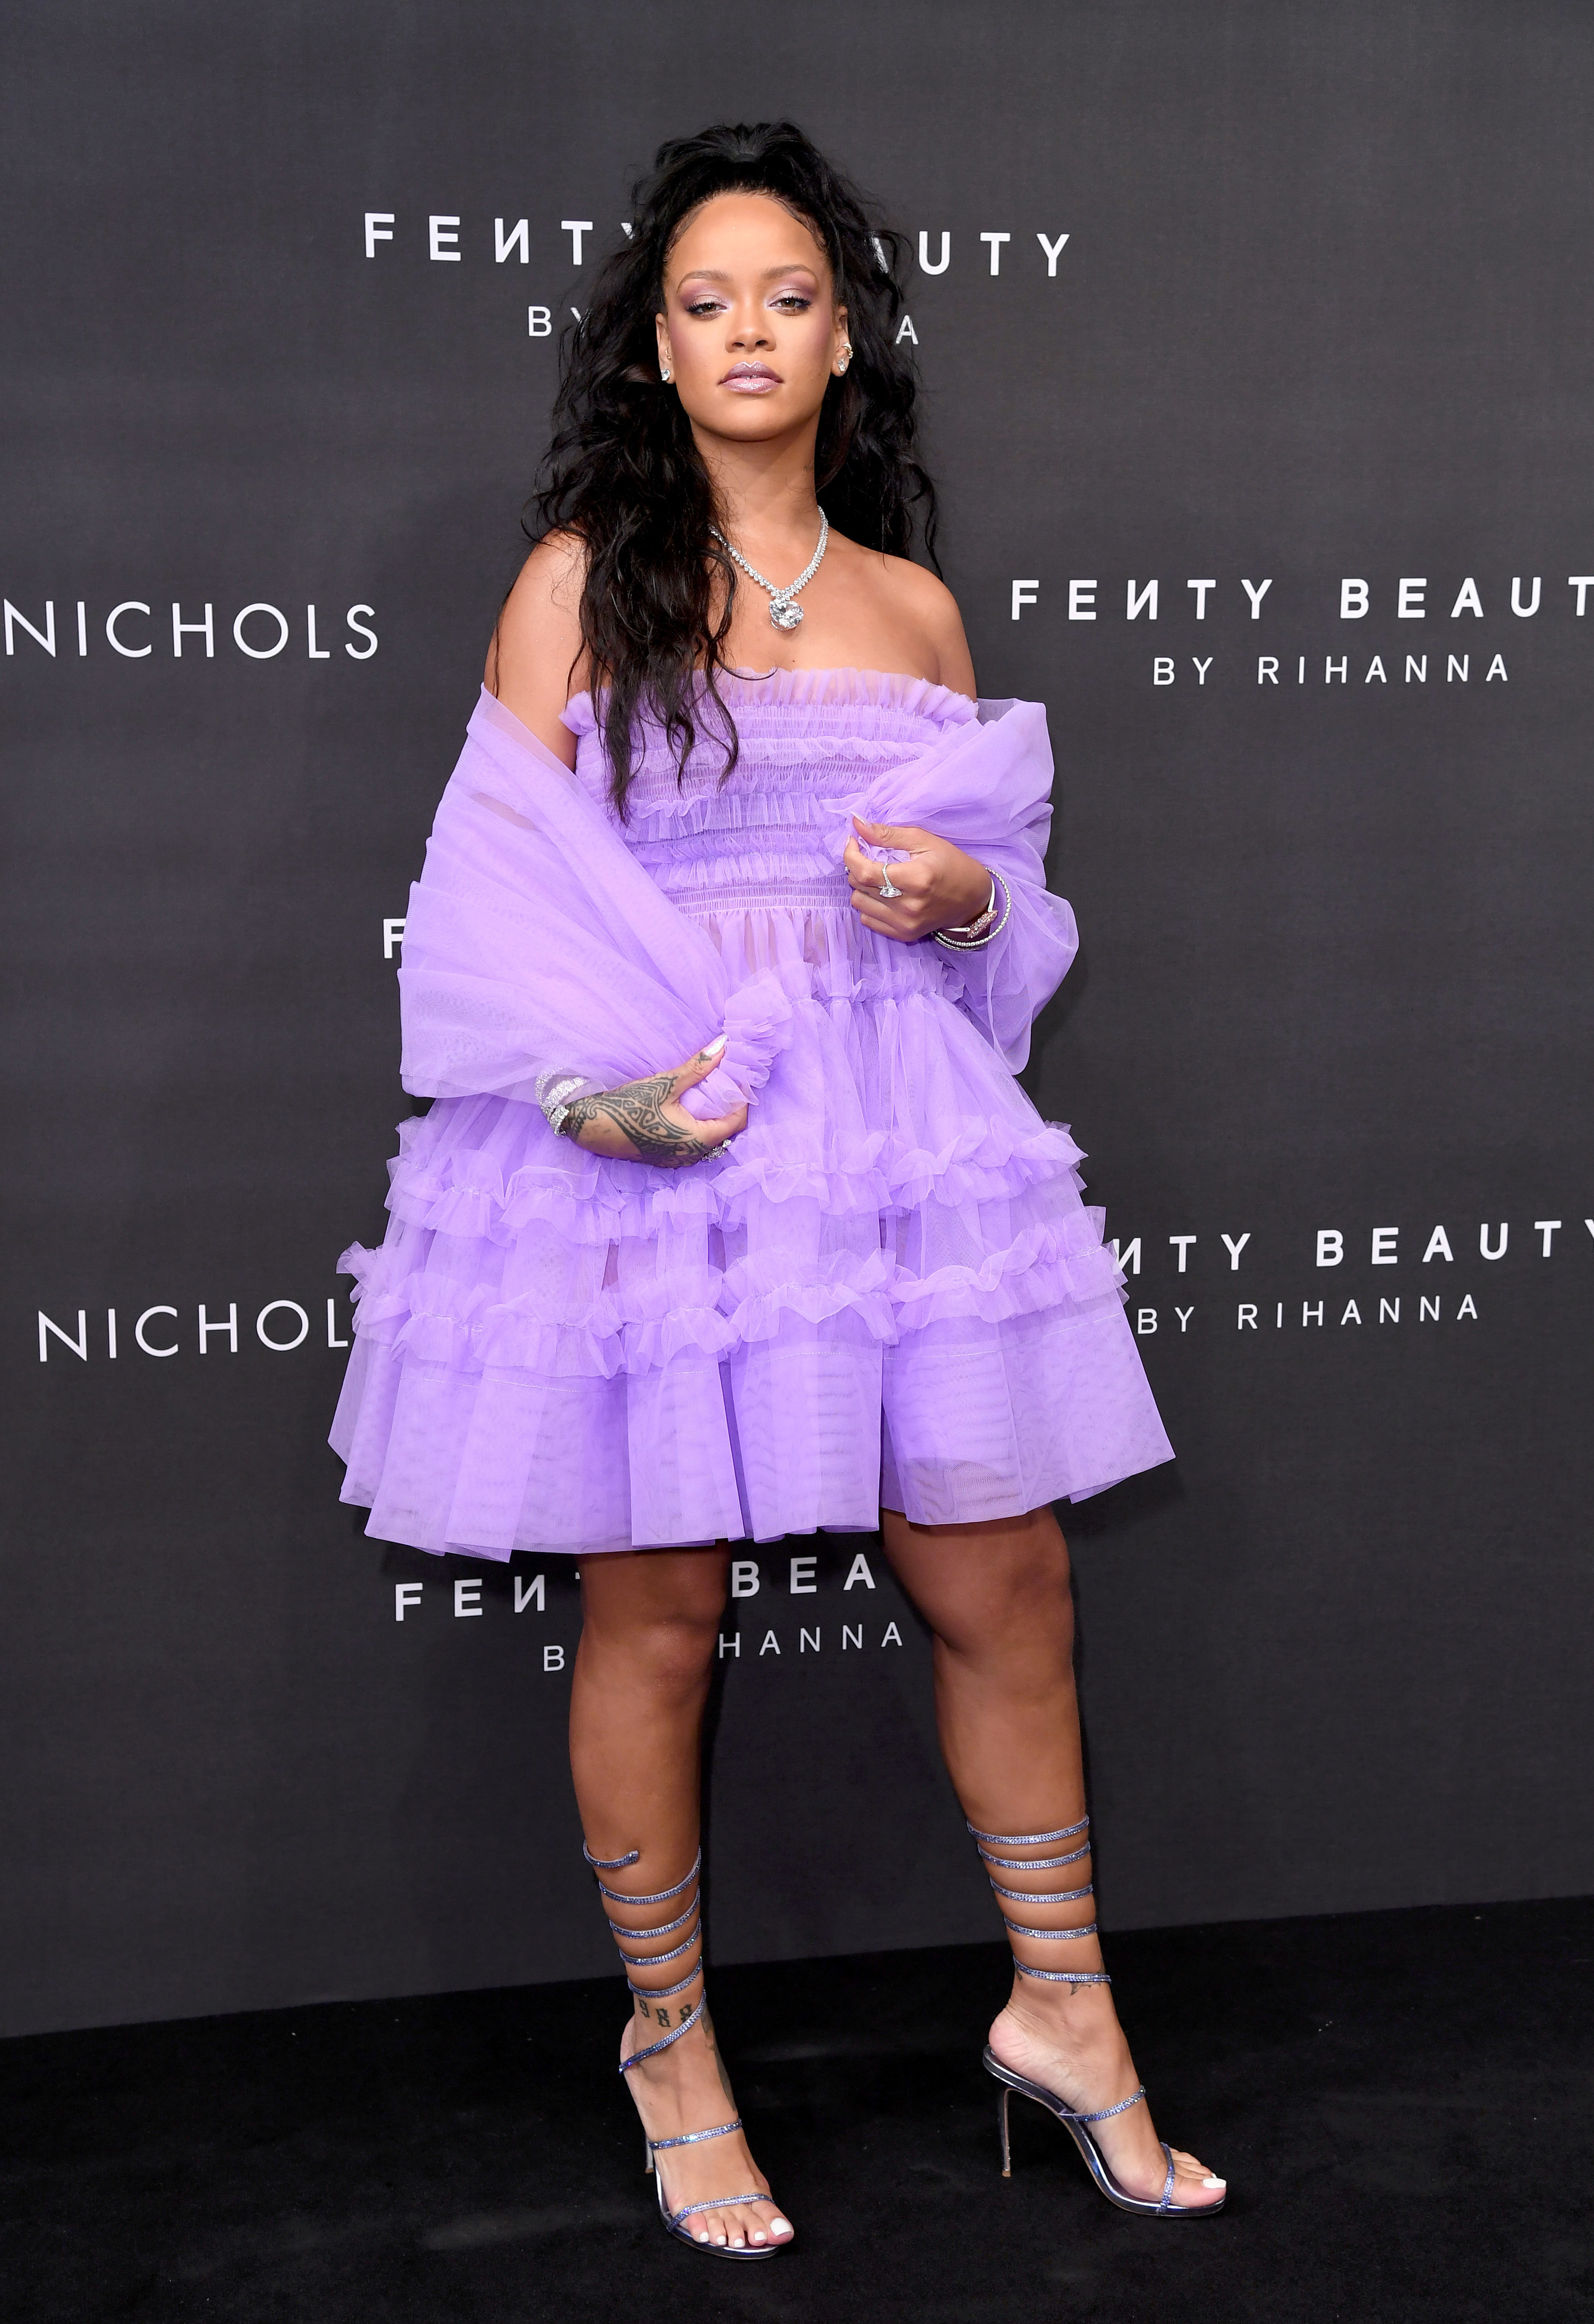 Rihanna posing for her Fenty Beauty launch party in London